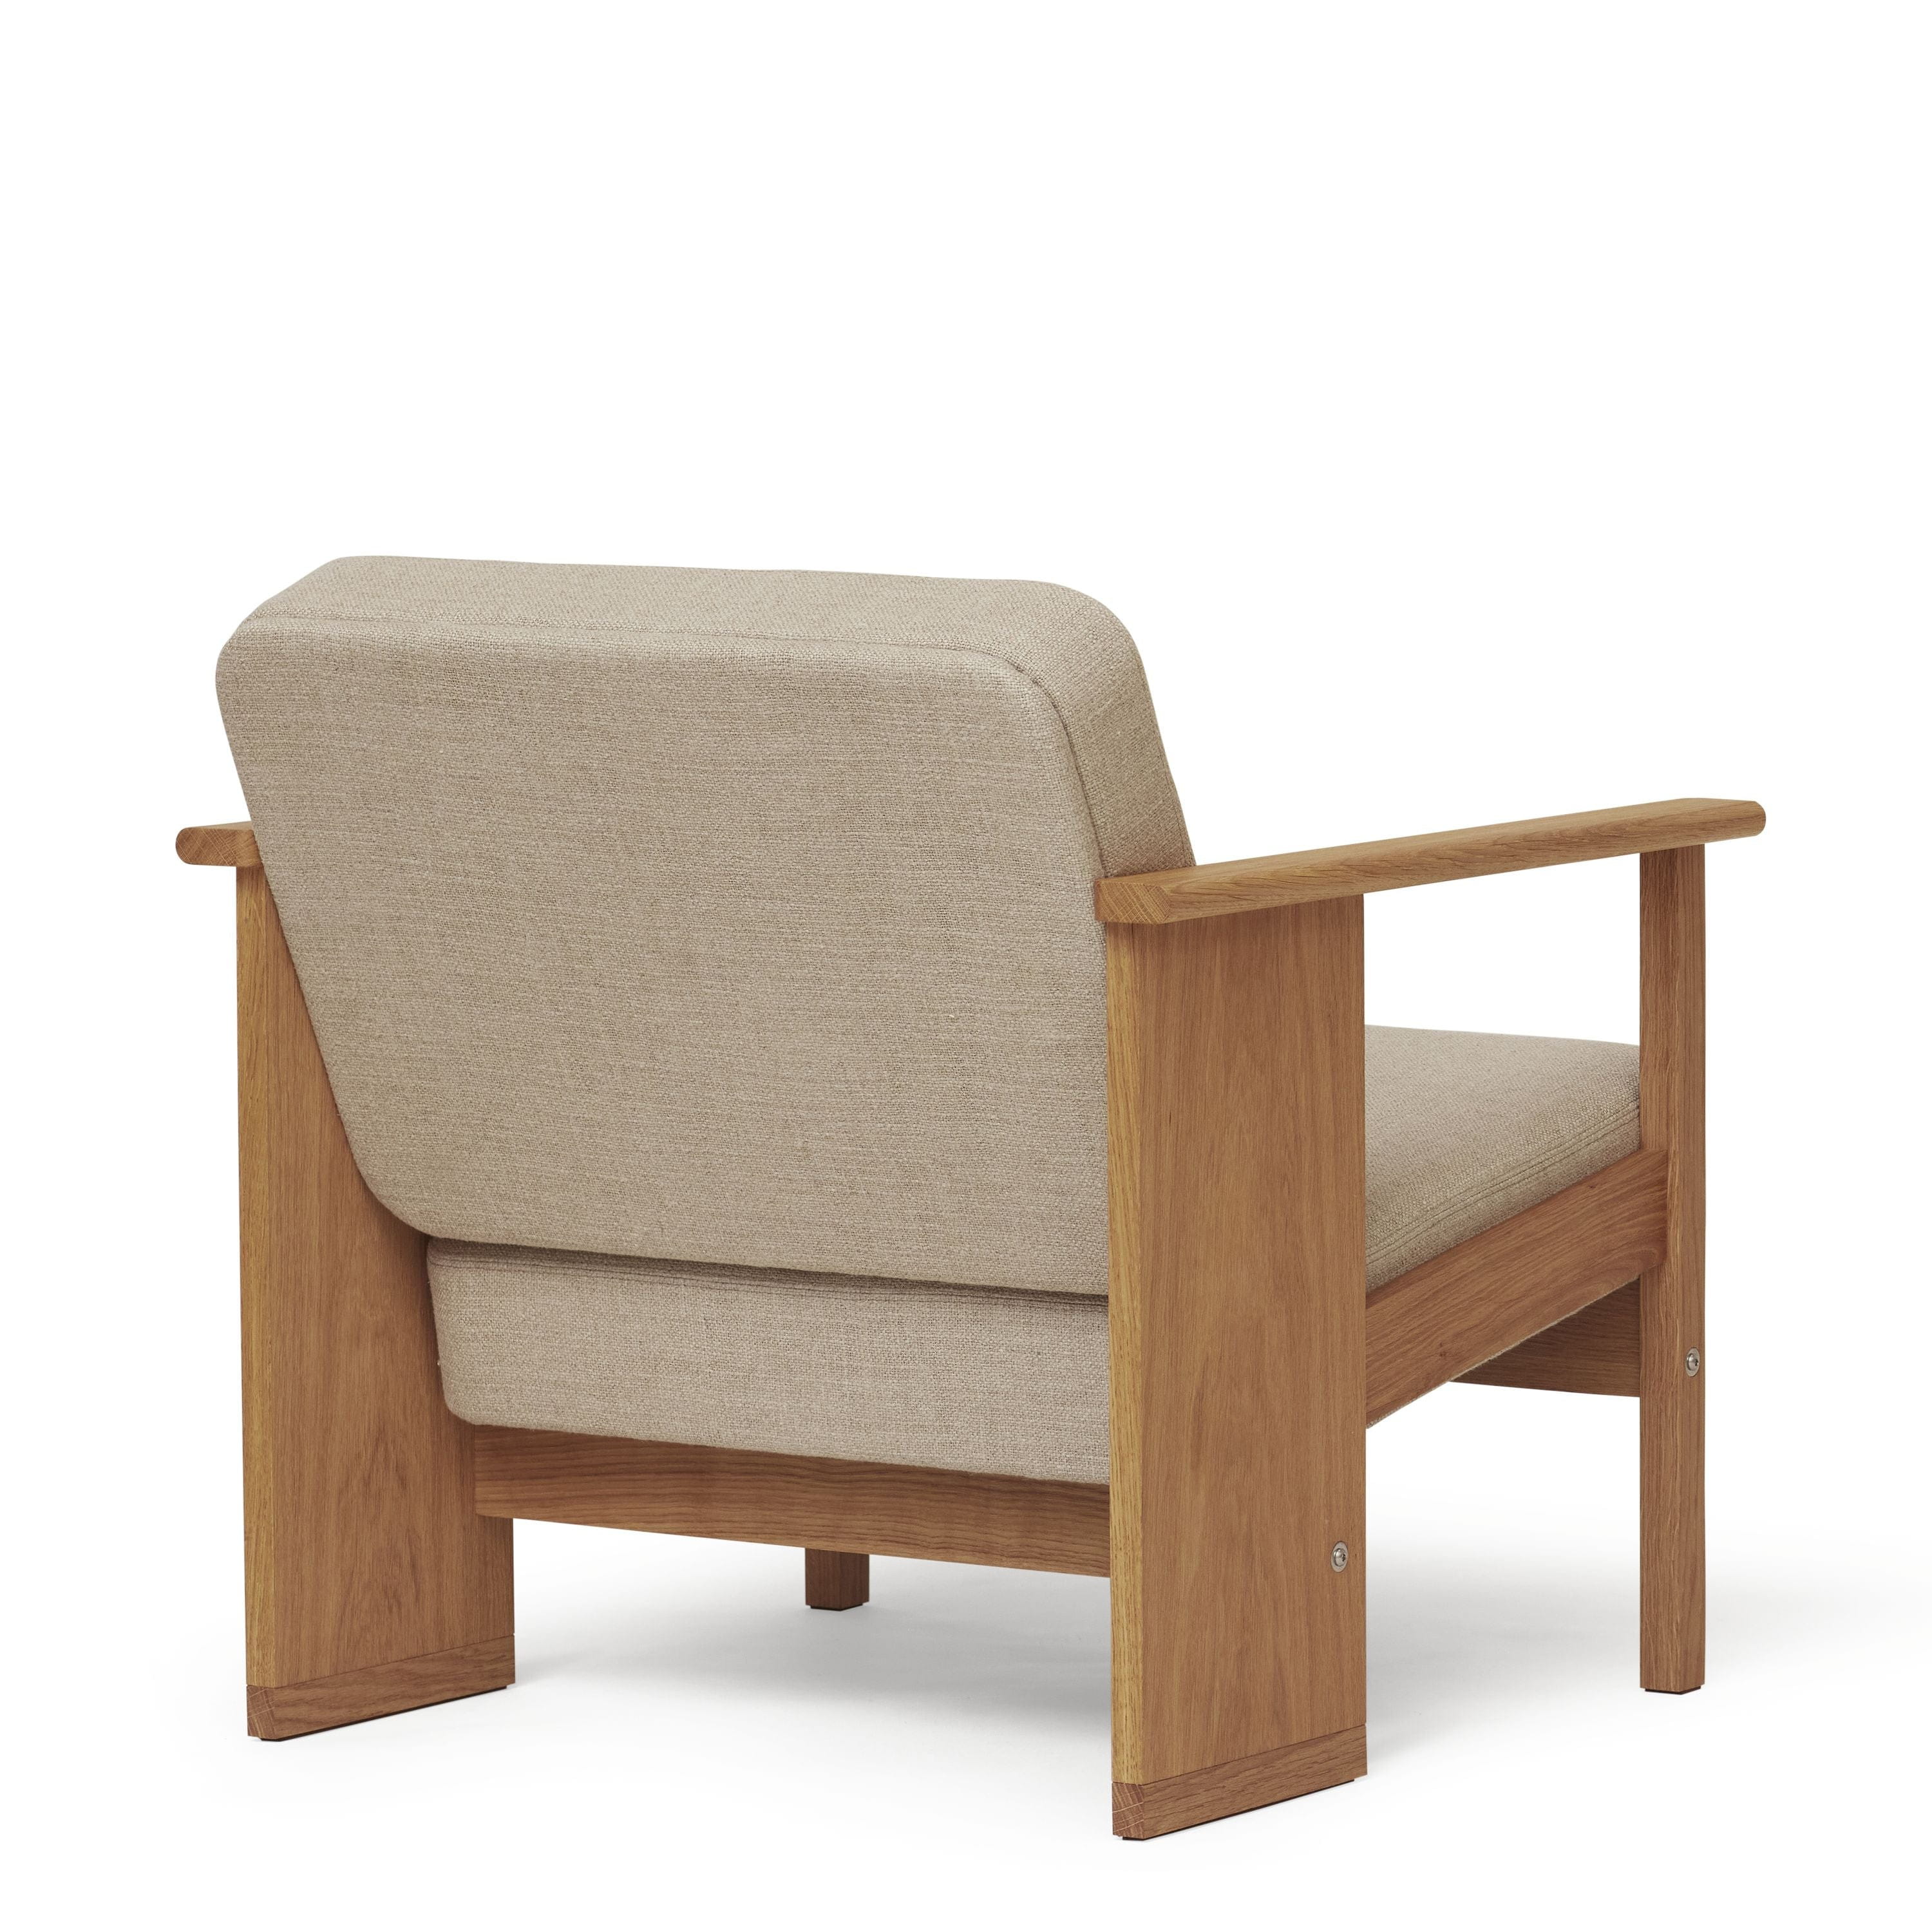 Form & Refine Block Lounge Chair. Ek